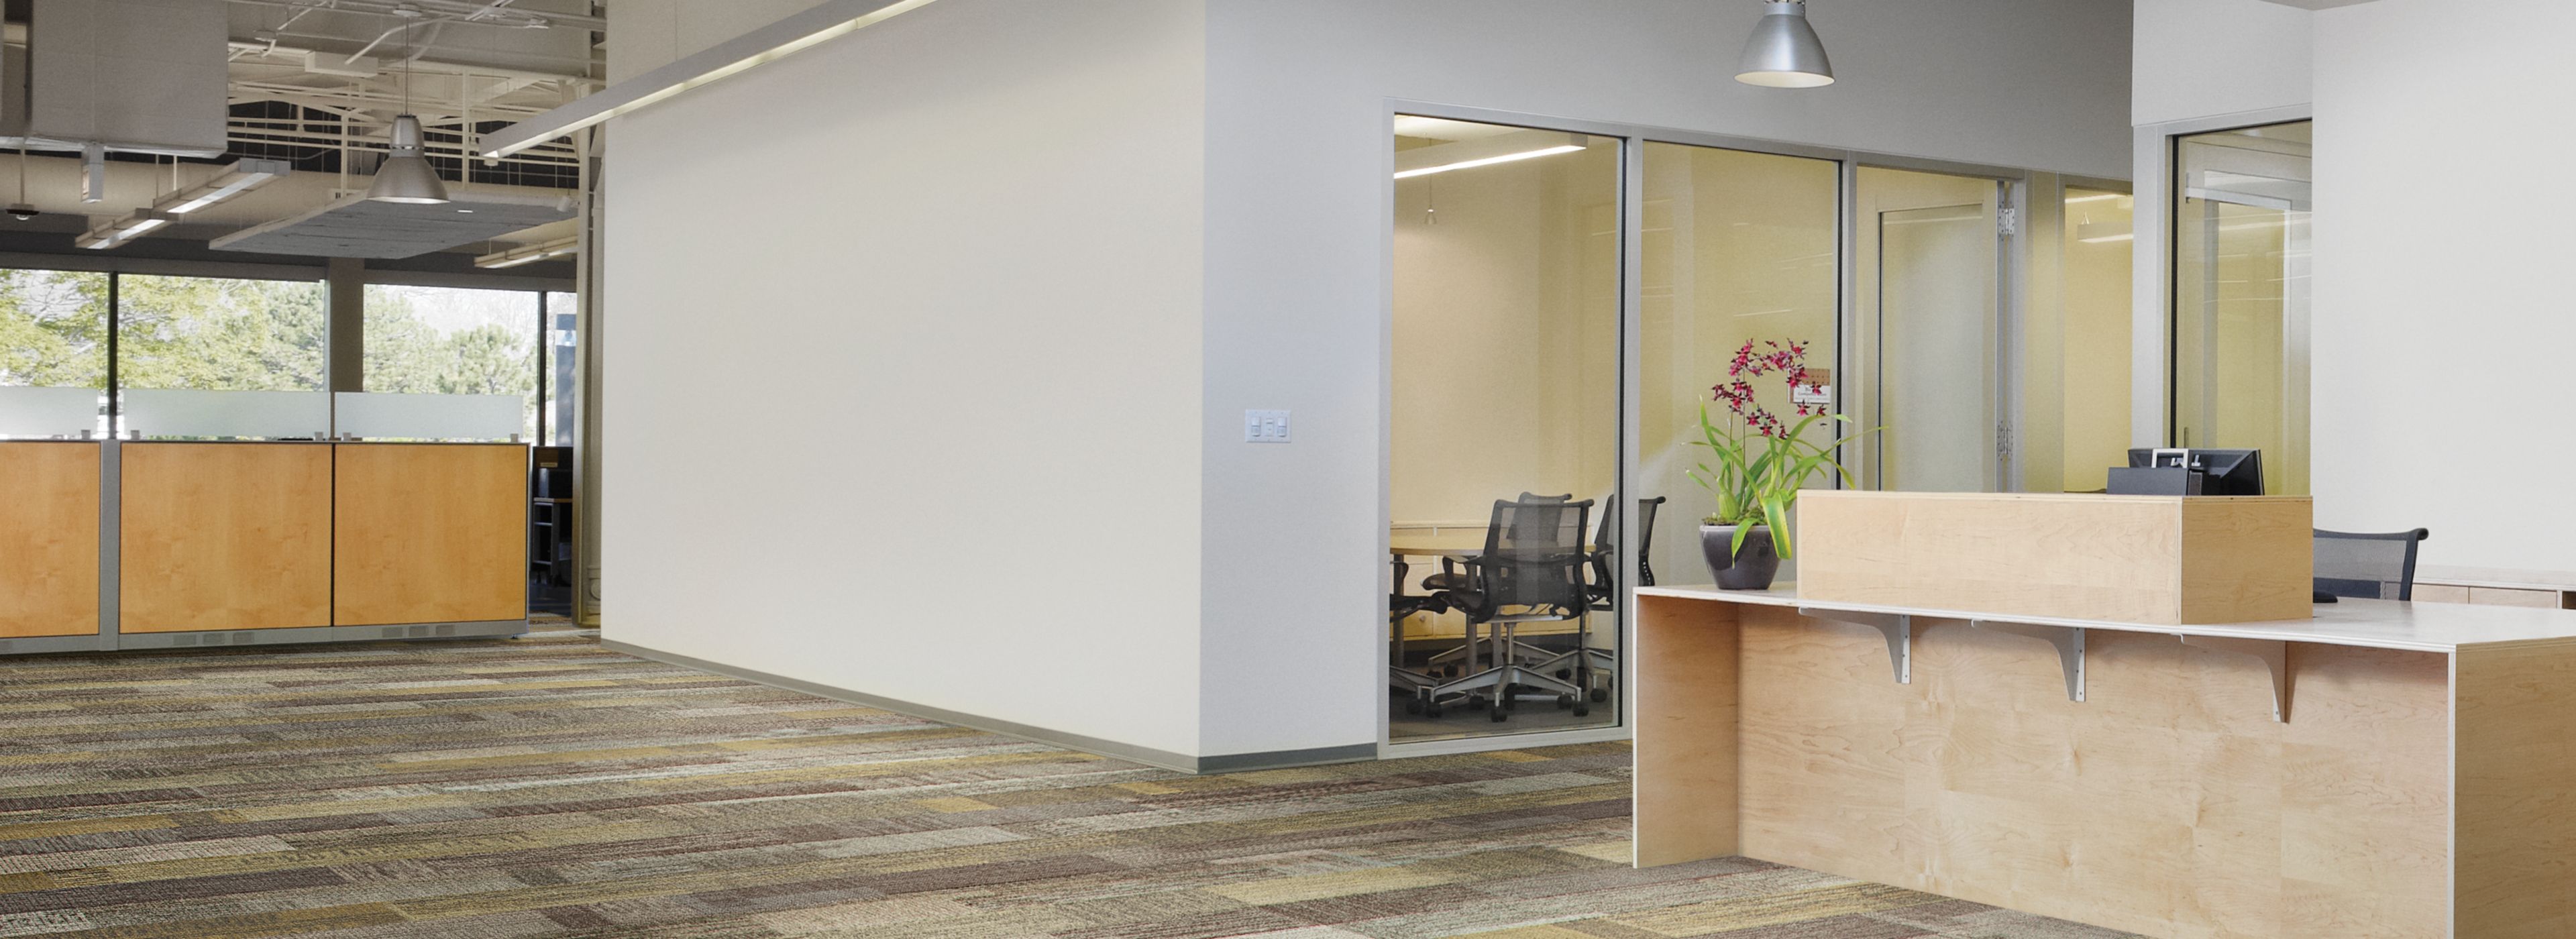 Interface Verticals plank carpet tile in open office setting with reception desk imagen número 1